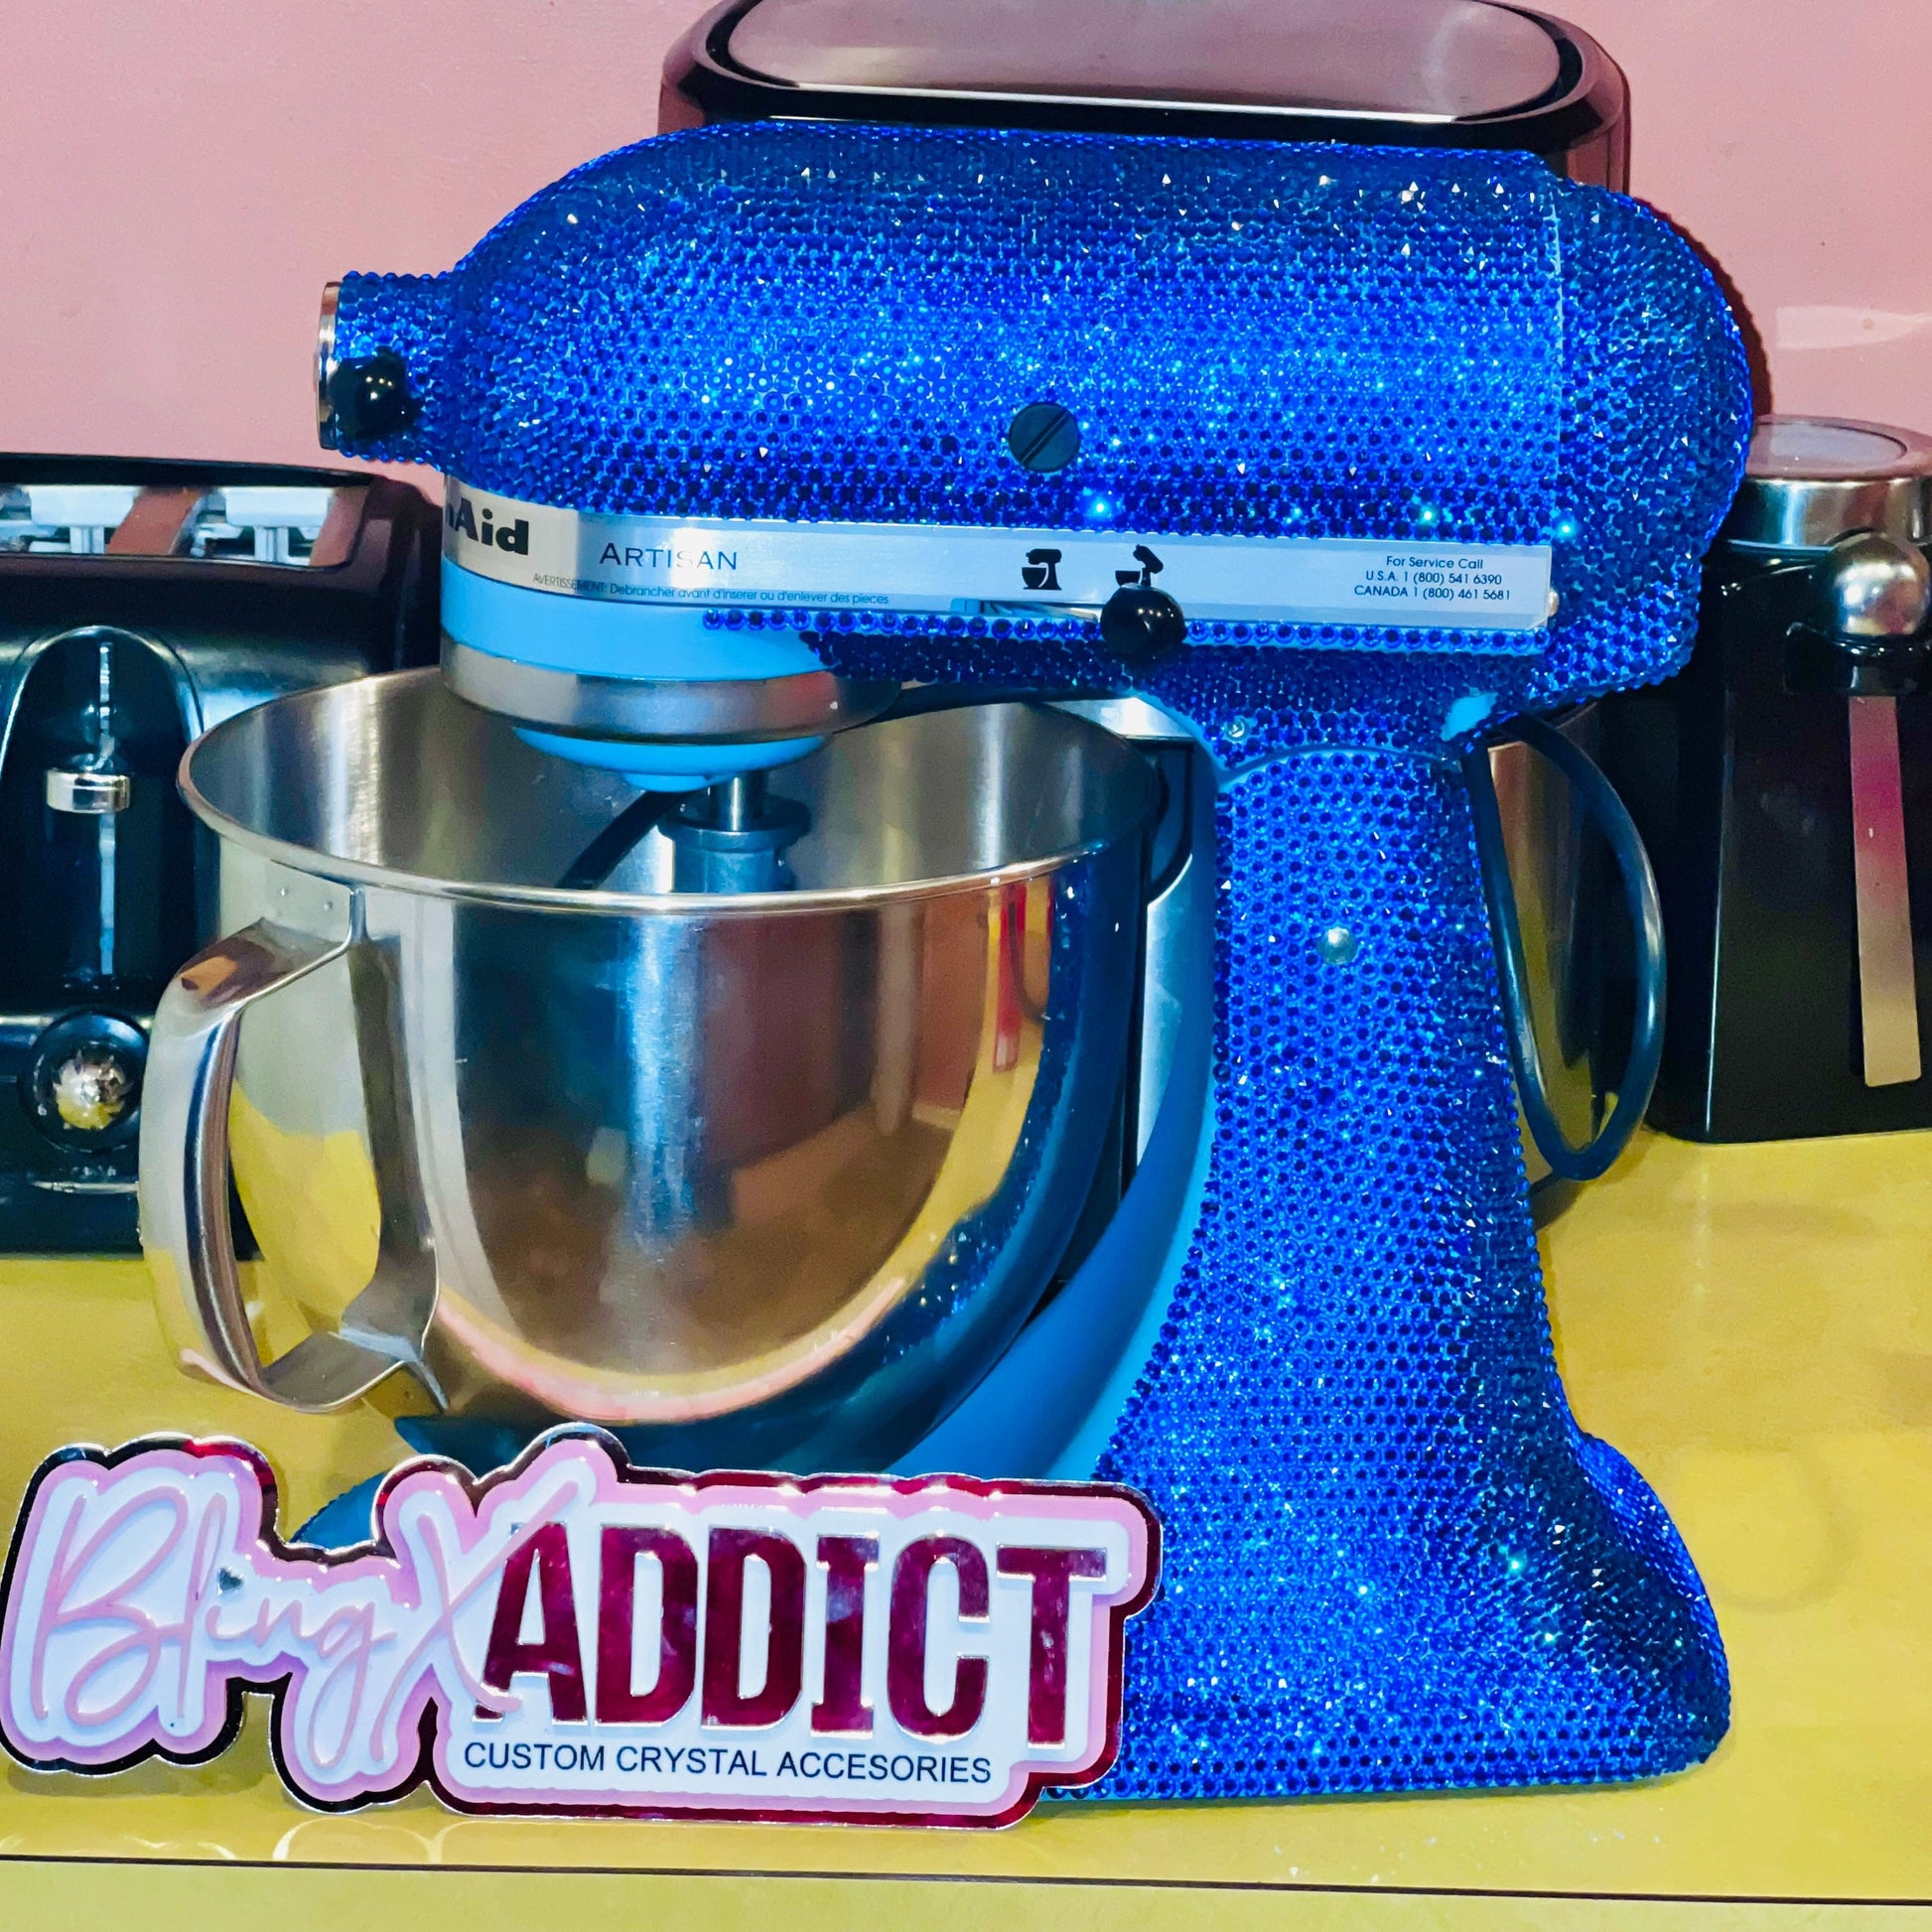 KitchenAid 5-Quart Stand Mixer + grinder attachment for $260 ($380+ value)